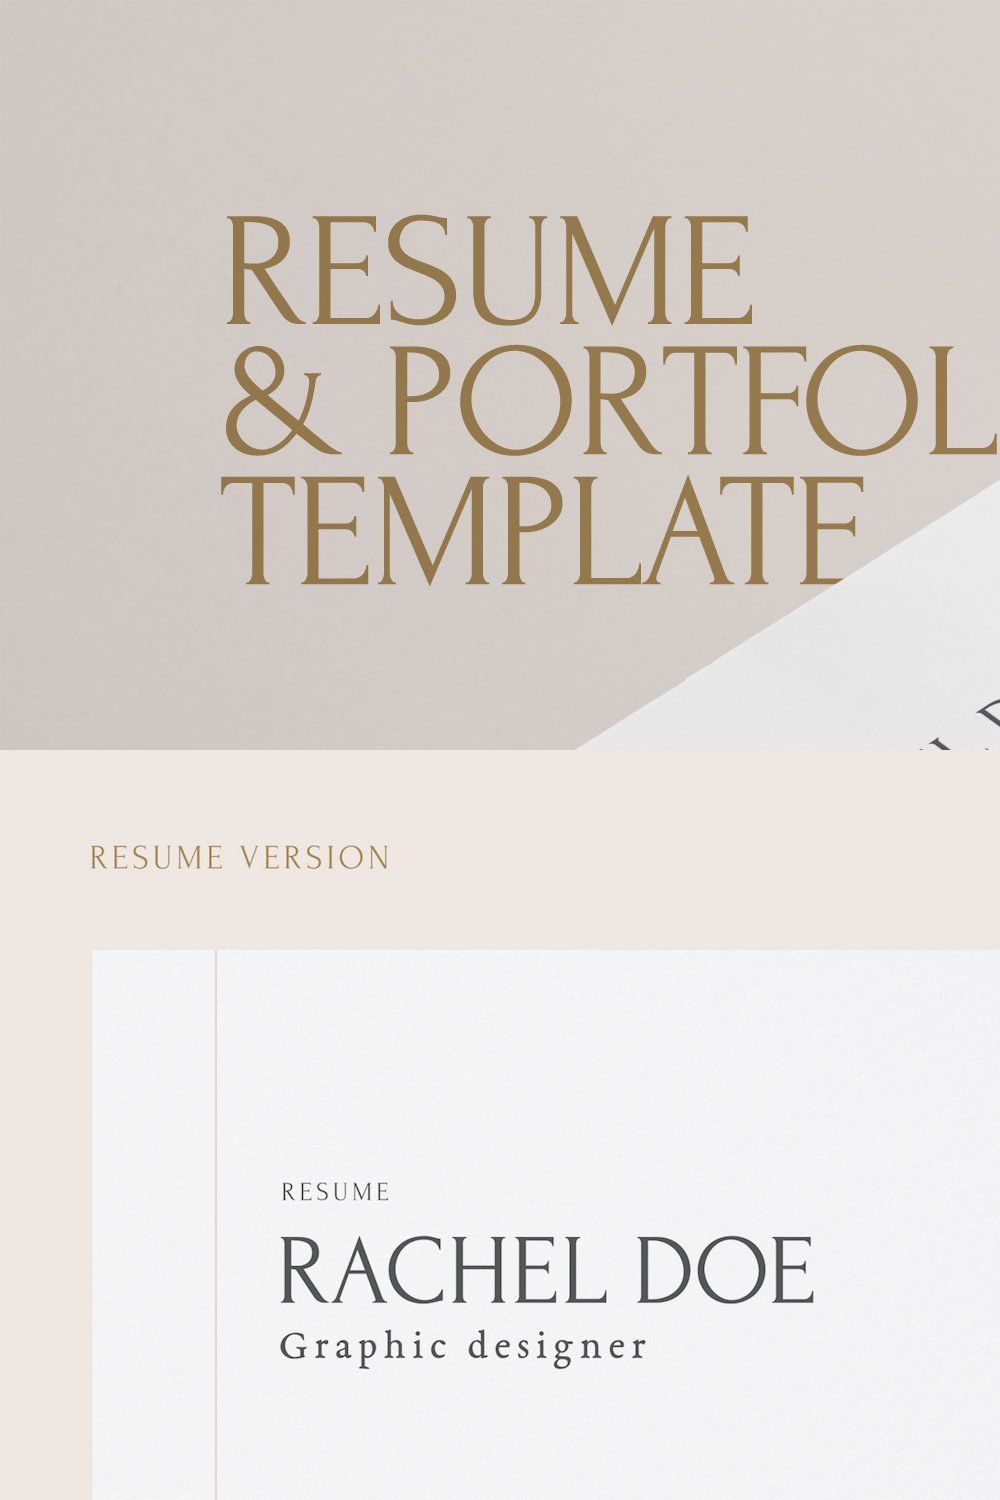 Resume & Portfolio Template pinterest preview image.